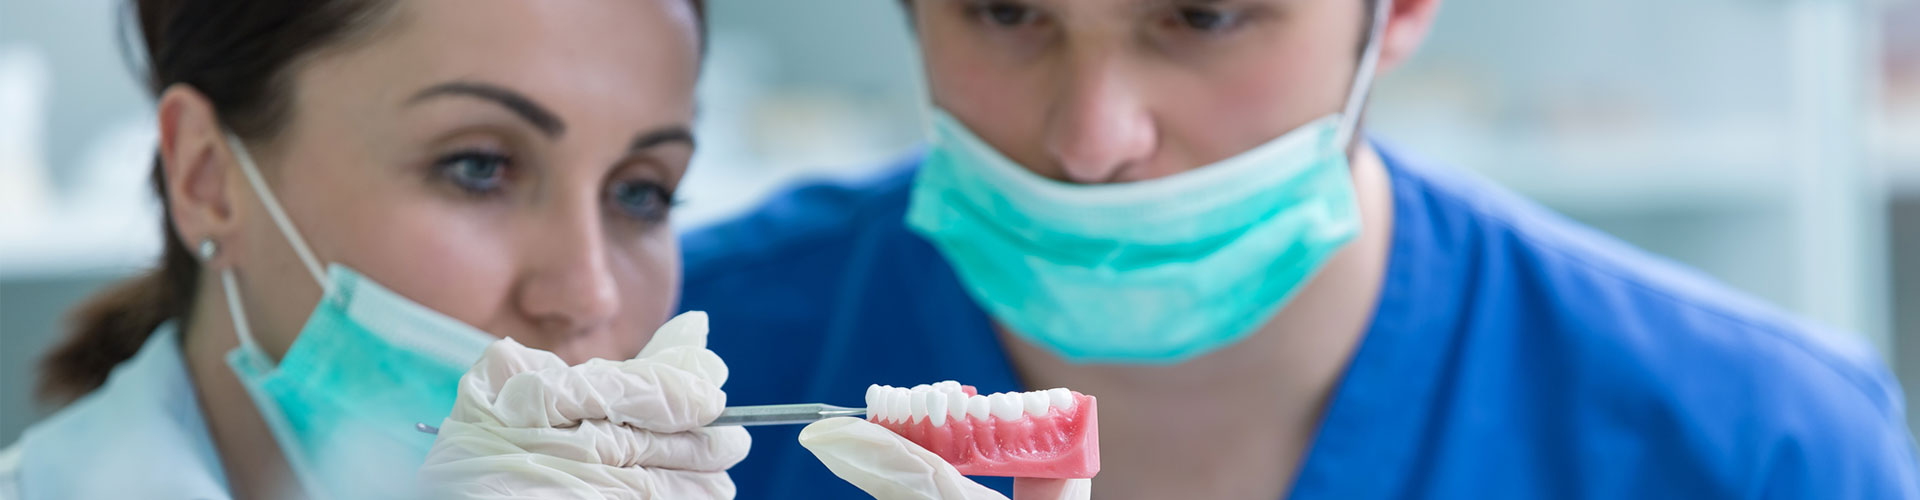 Dental technician working on denture